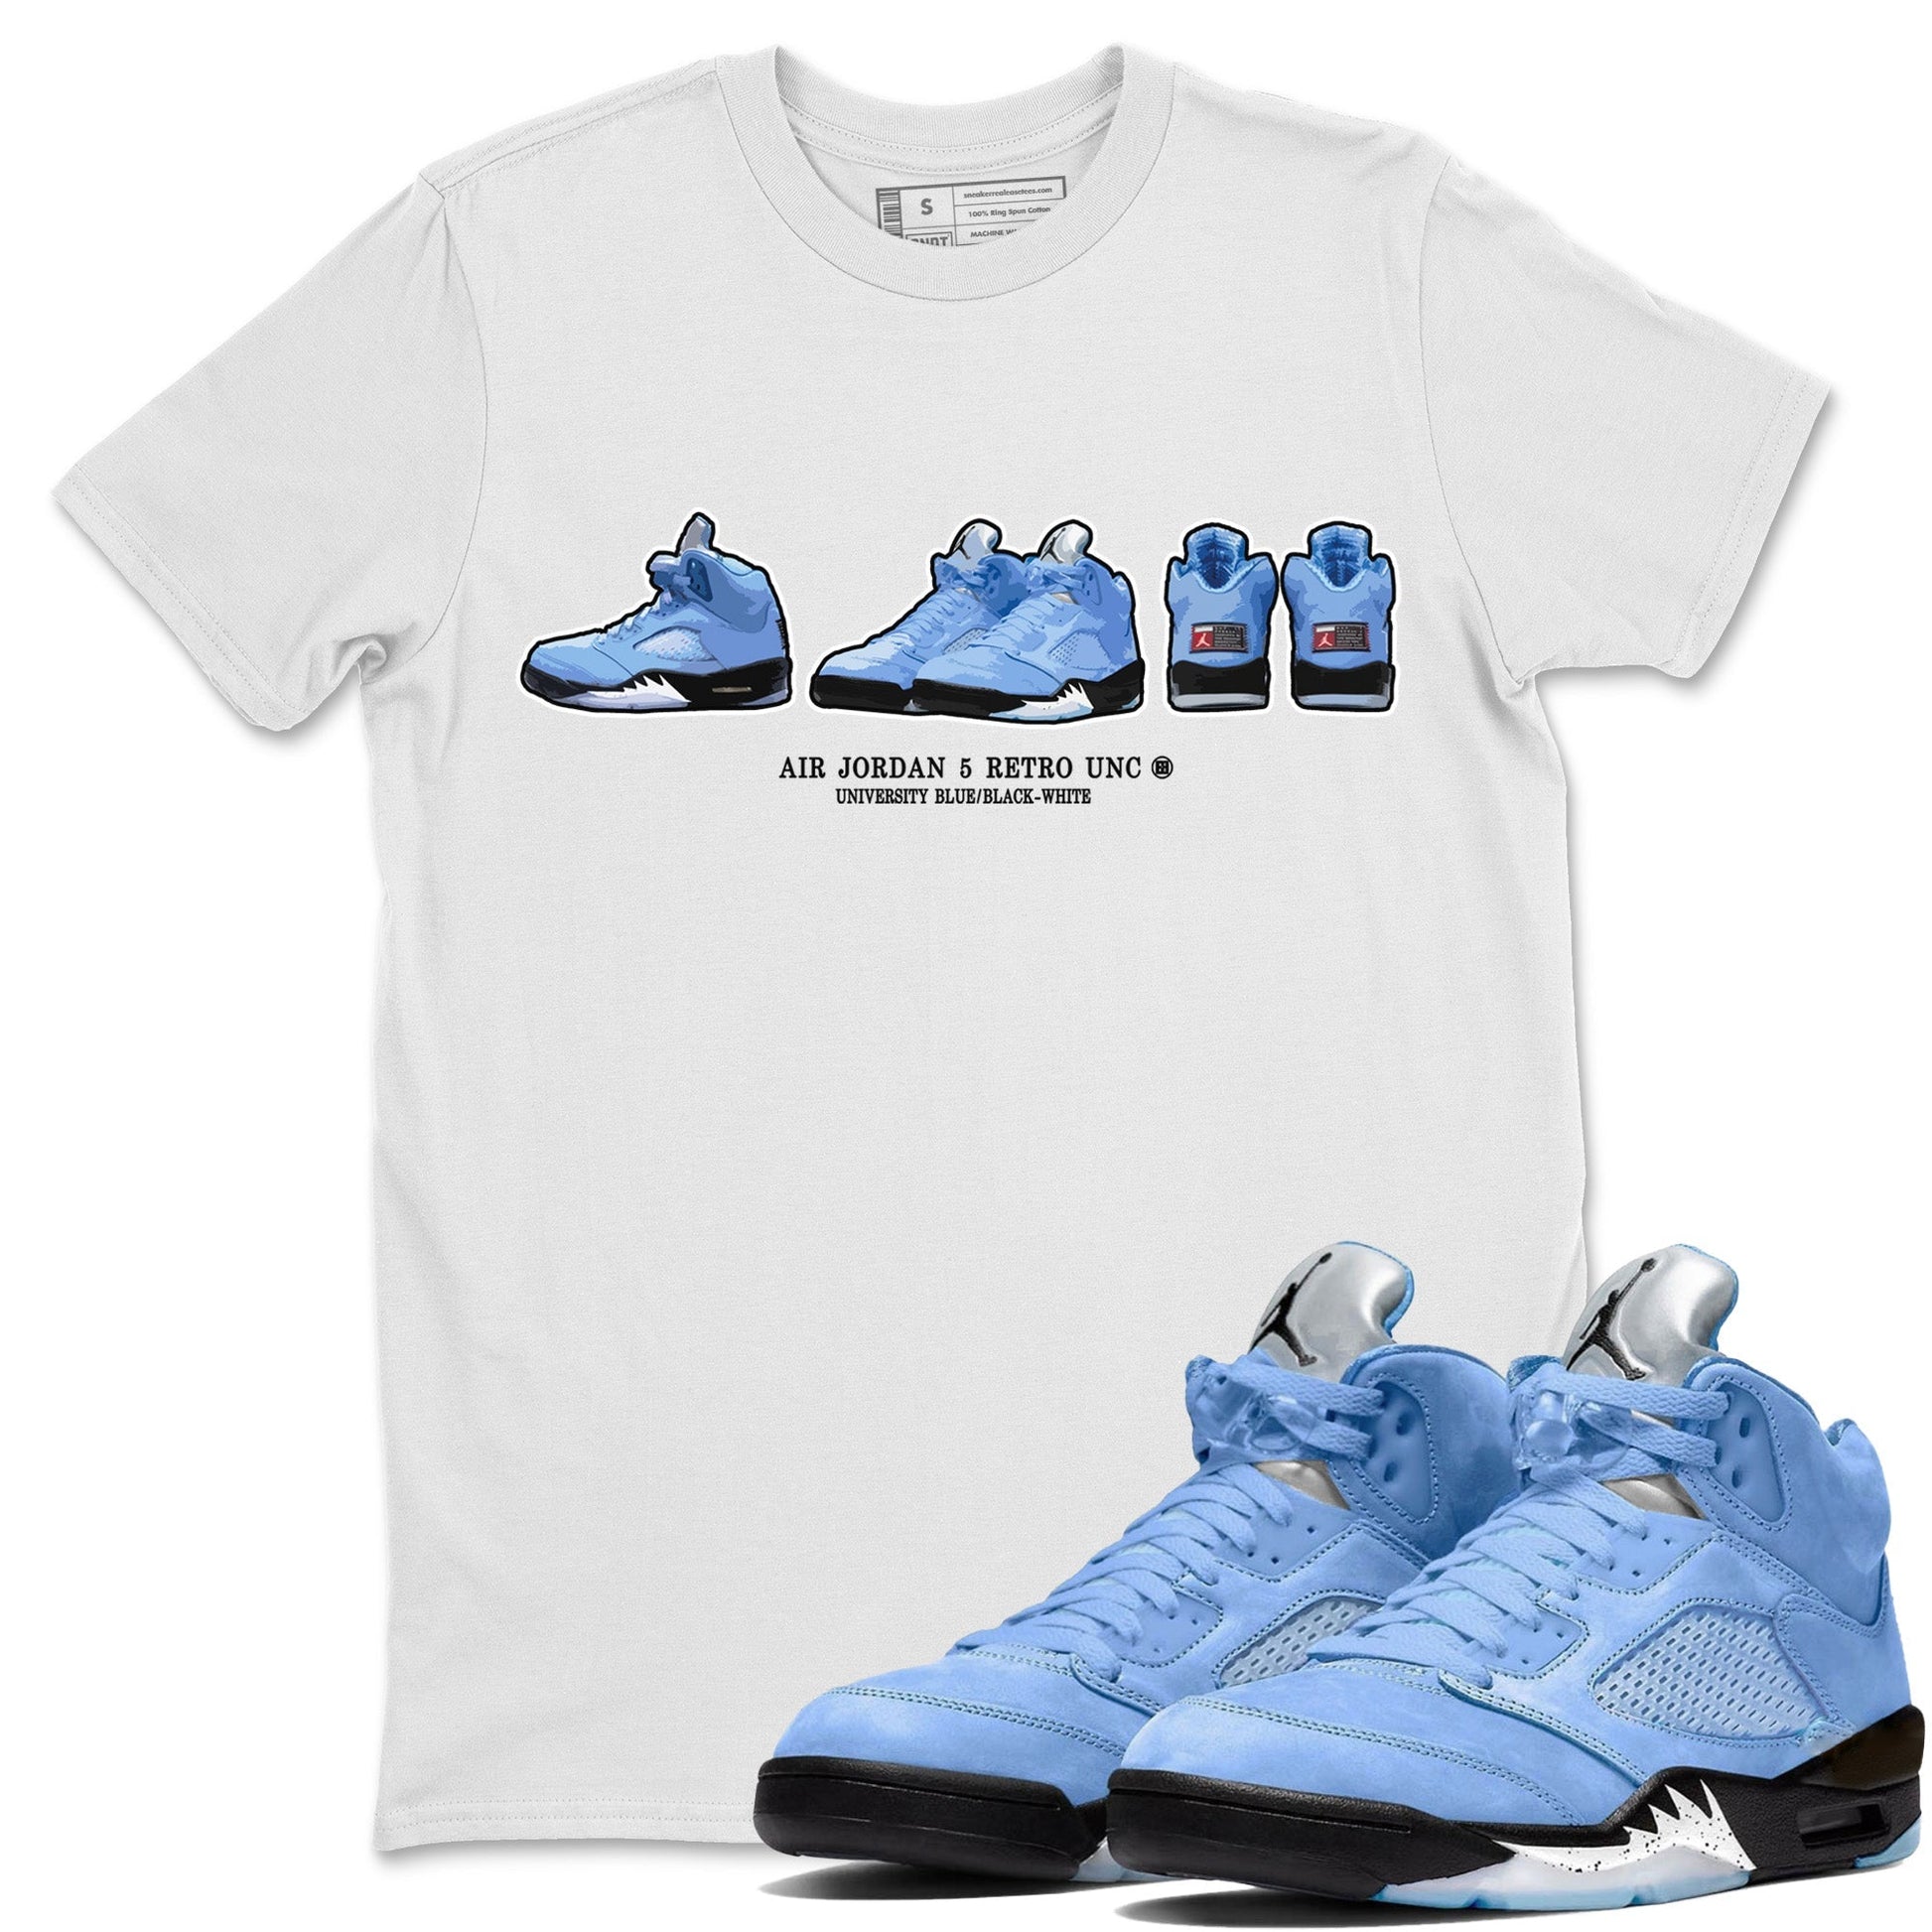 Air Jordan 5 UNC Shirt To Match Jordans Sneaker Prelude Sneaker Tees Air Jordan 5 Retro UNC Drip Gear Zone Sneaker Matching Clothing Unisex Shirts White 1